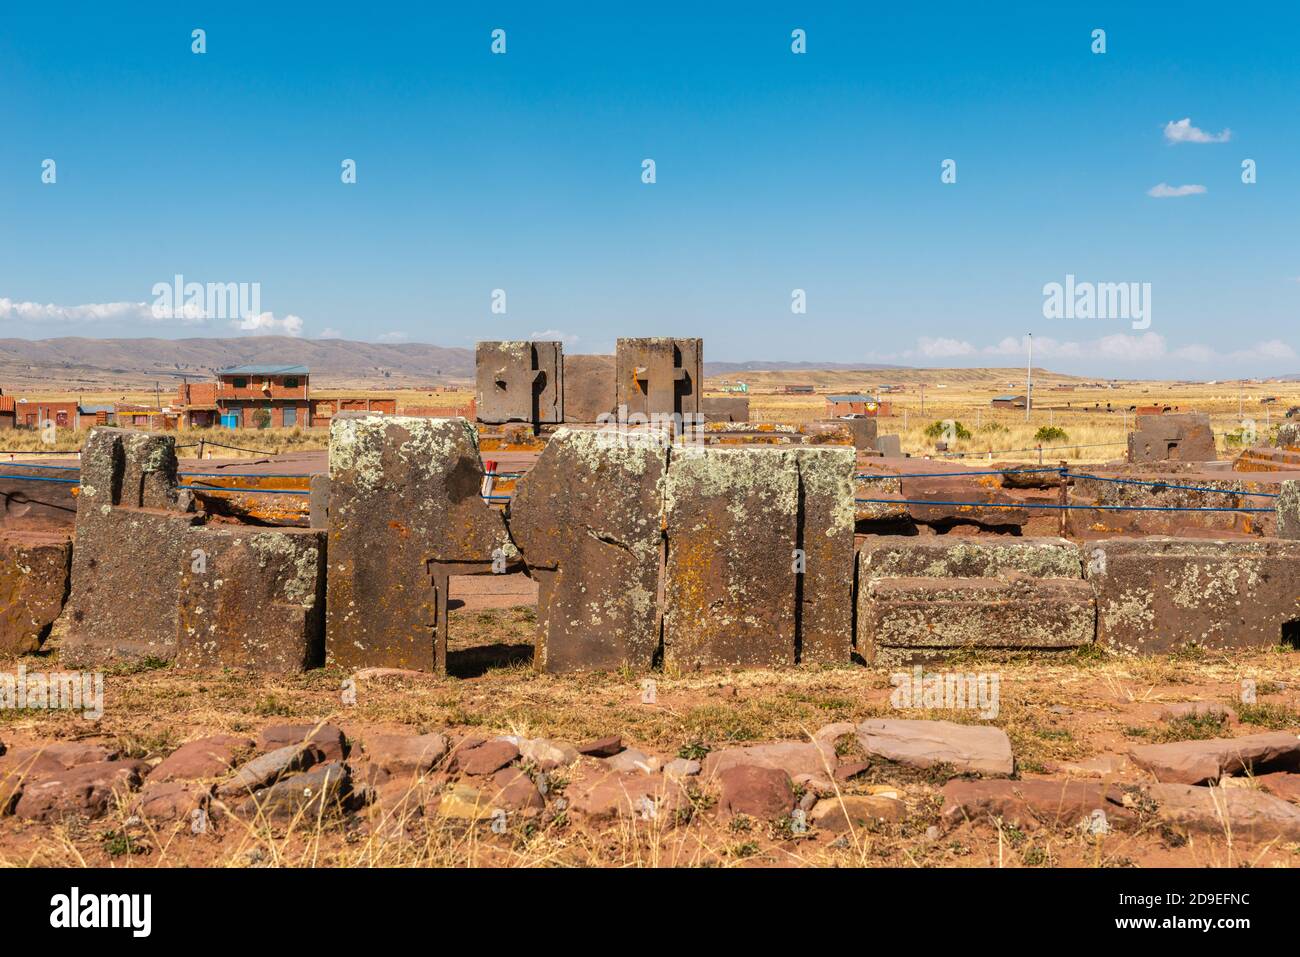 Rituales incas fotografías e imágenes de alta resolución - Alamy